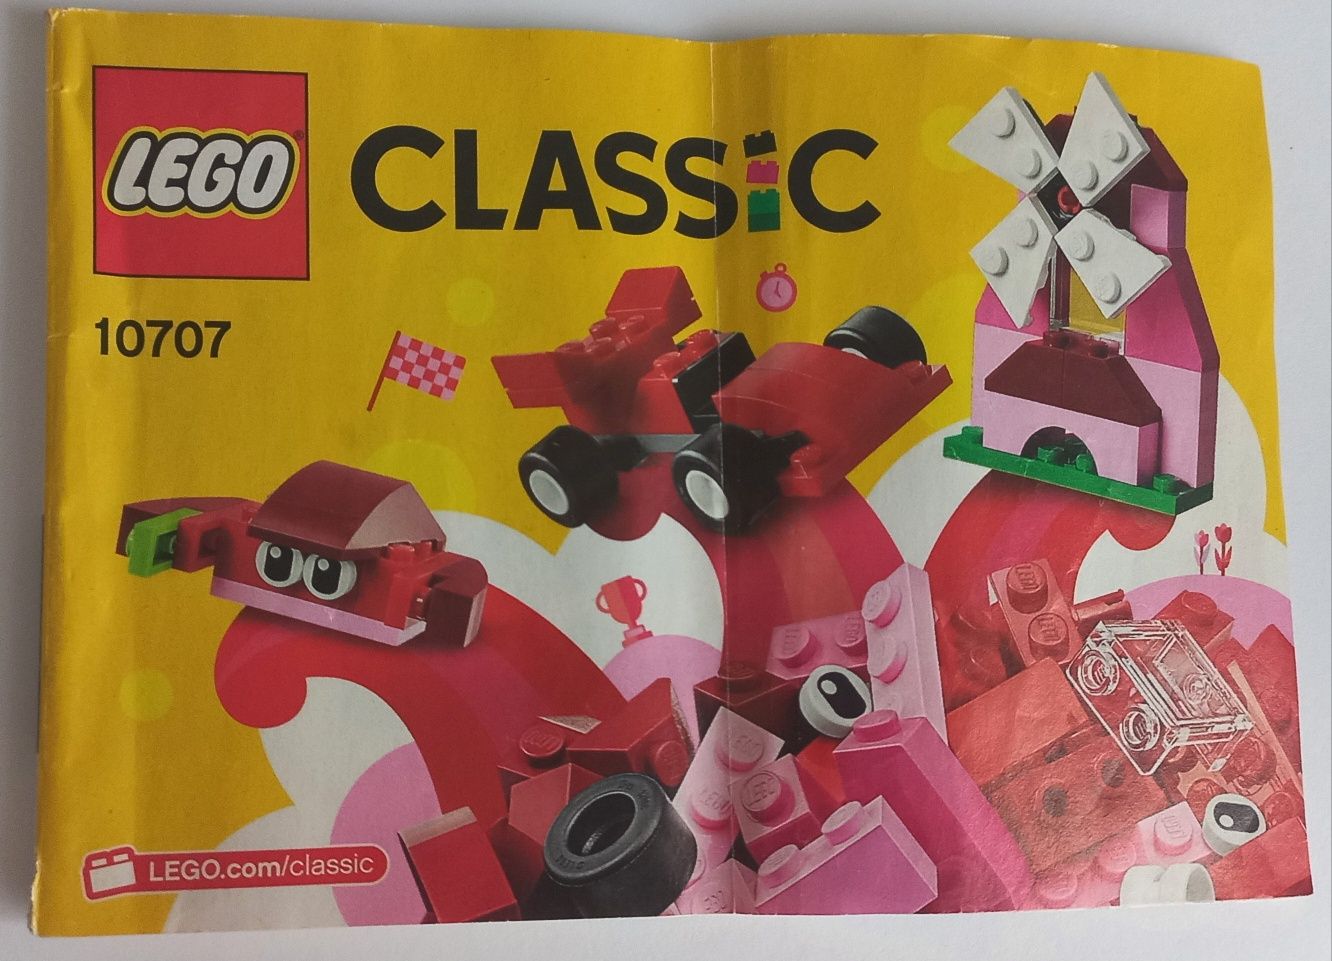 ( Lego original ) LEGO classic, Червона коробка творчості (10707).